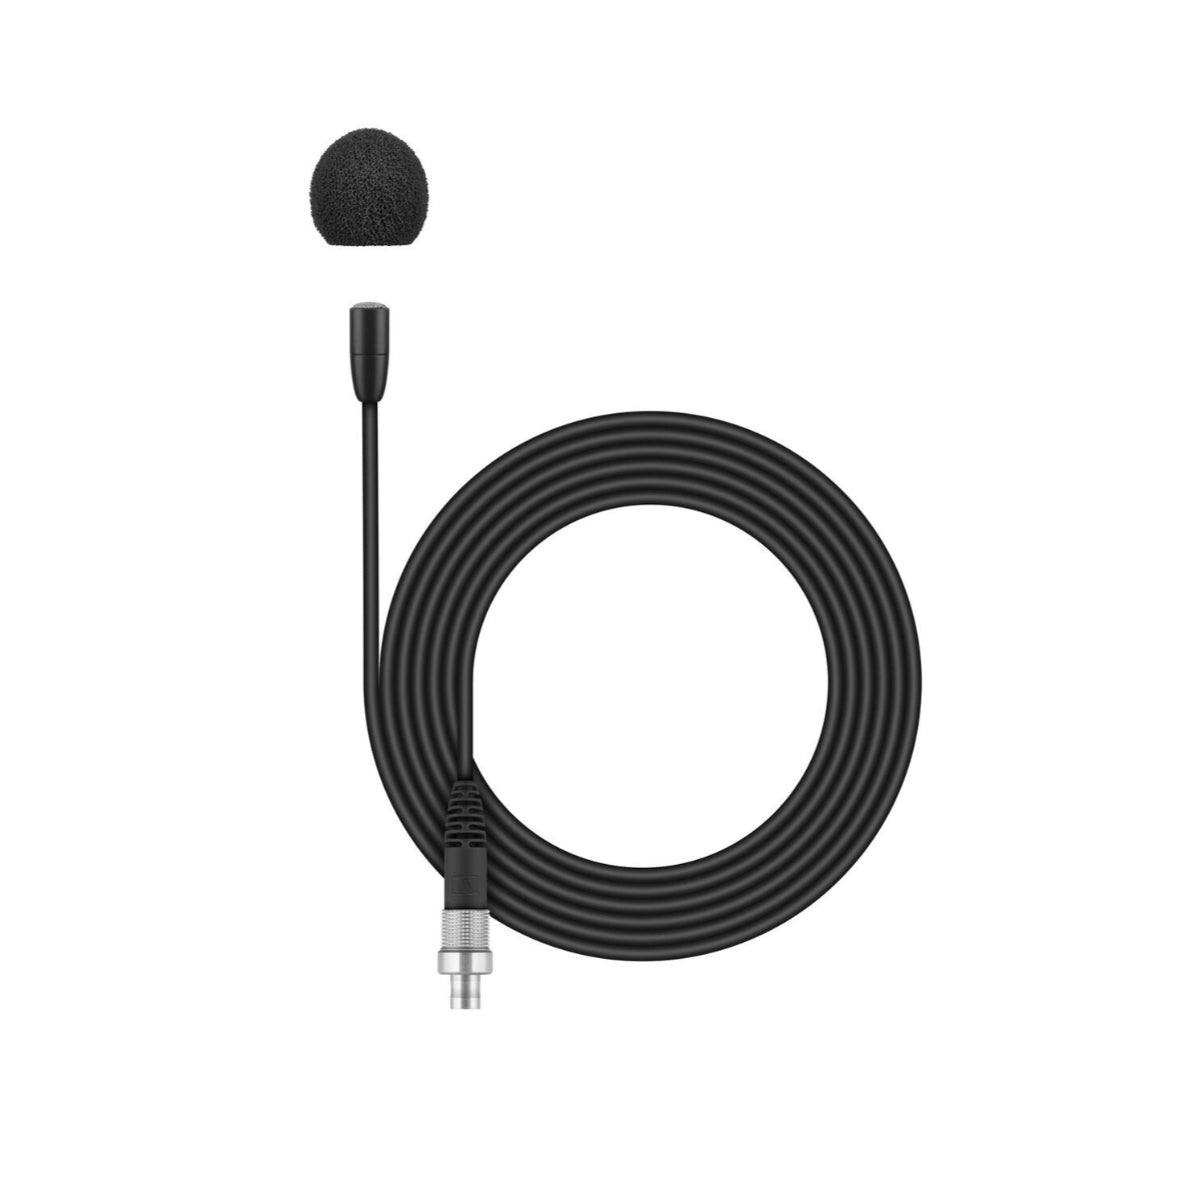 Sennheiser MKE Essential Omni-Black 3-Pin Lavalier Microphone, Omni-directional, Black, 1.6m Cable